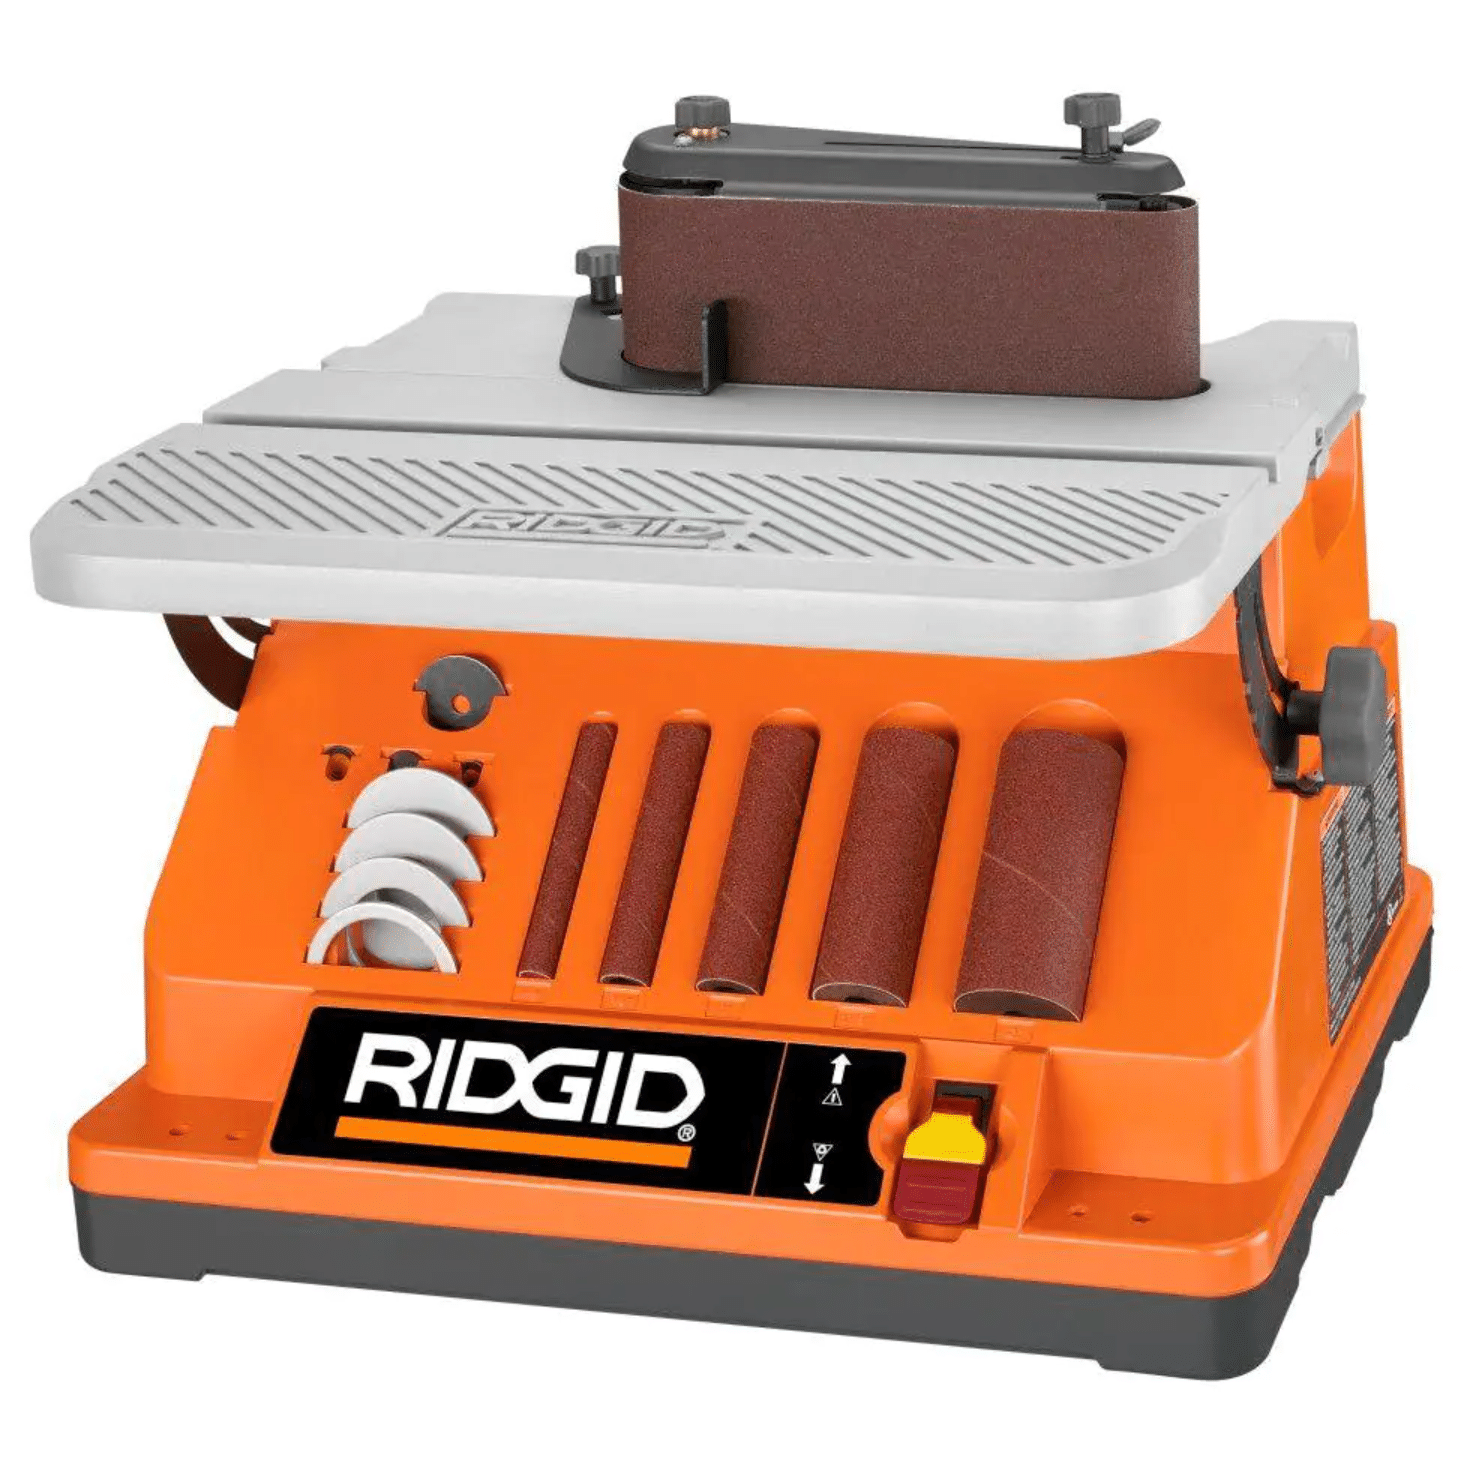 Ridgid EB4424 Oscillating Edge Belt/Spindle Sander